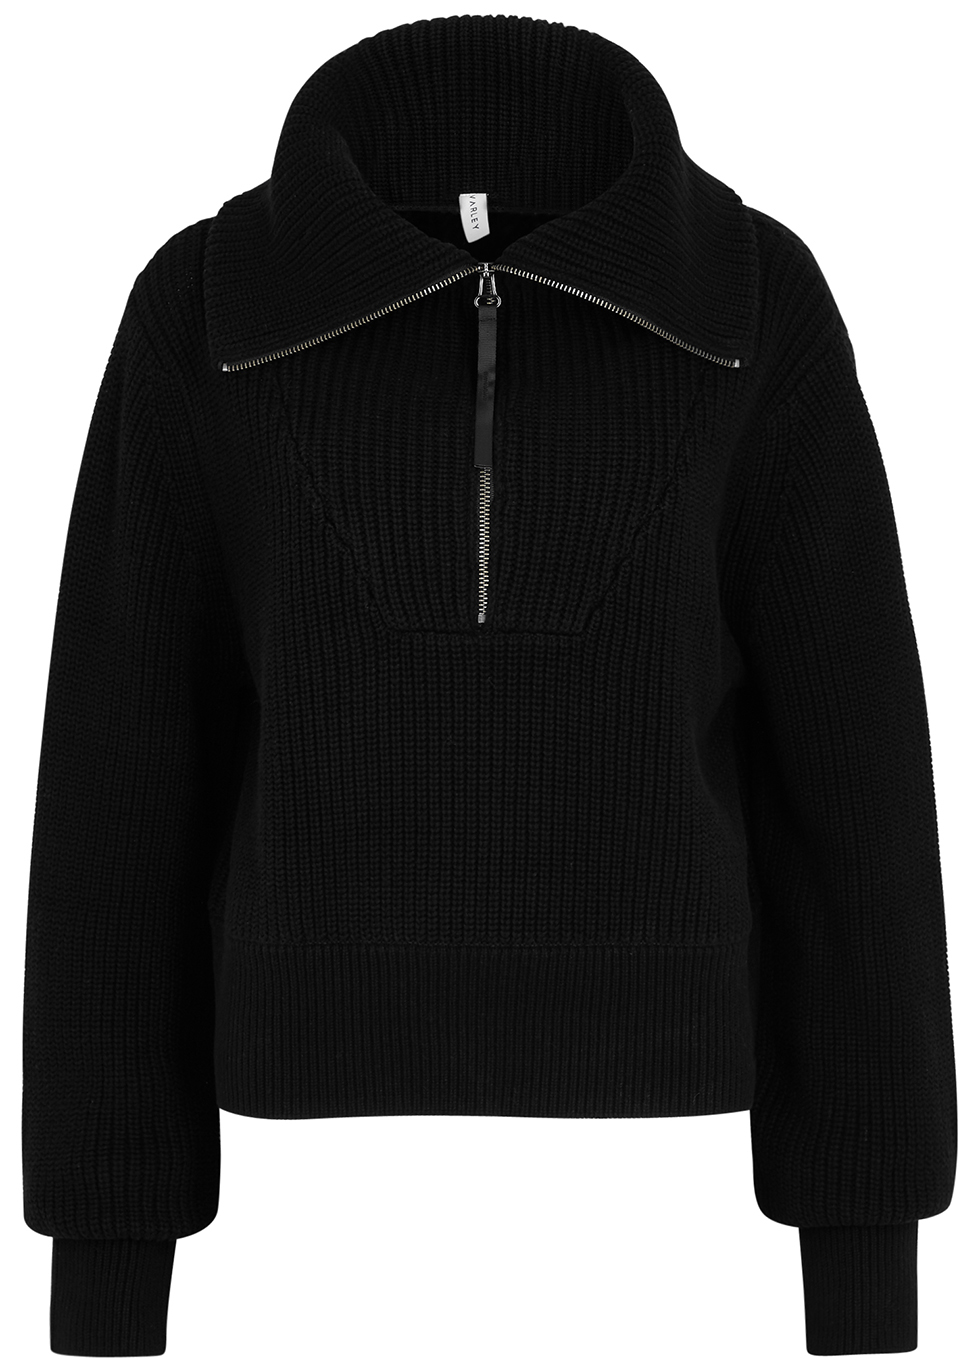 Varley Mentone half-zip knitted cotton jumper - Harvey Nichols